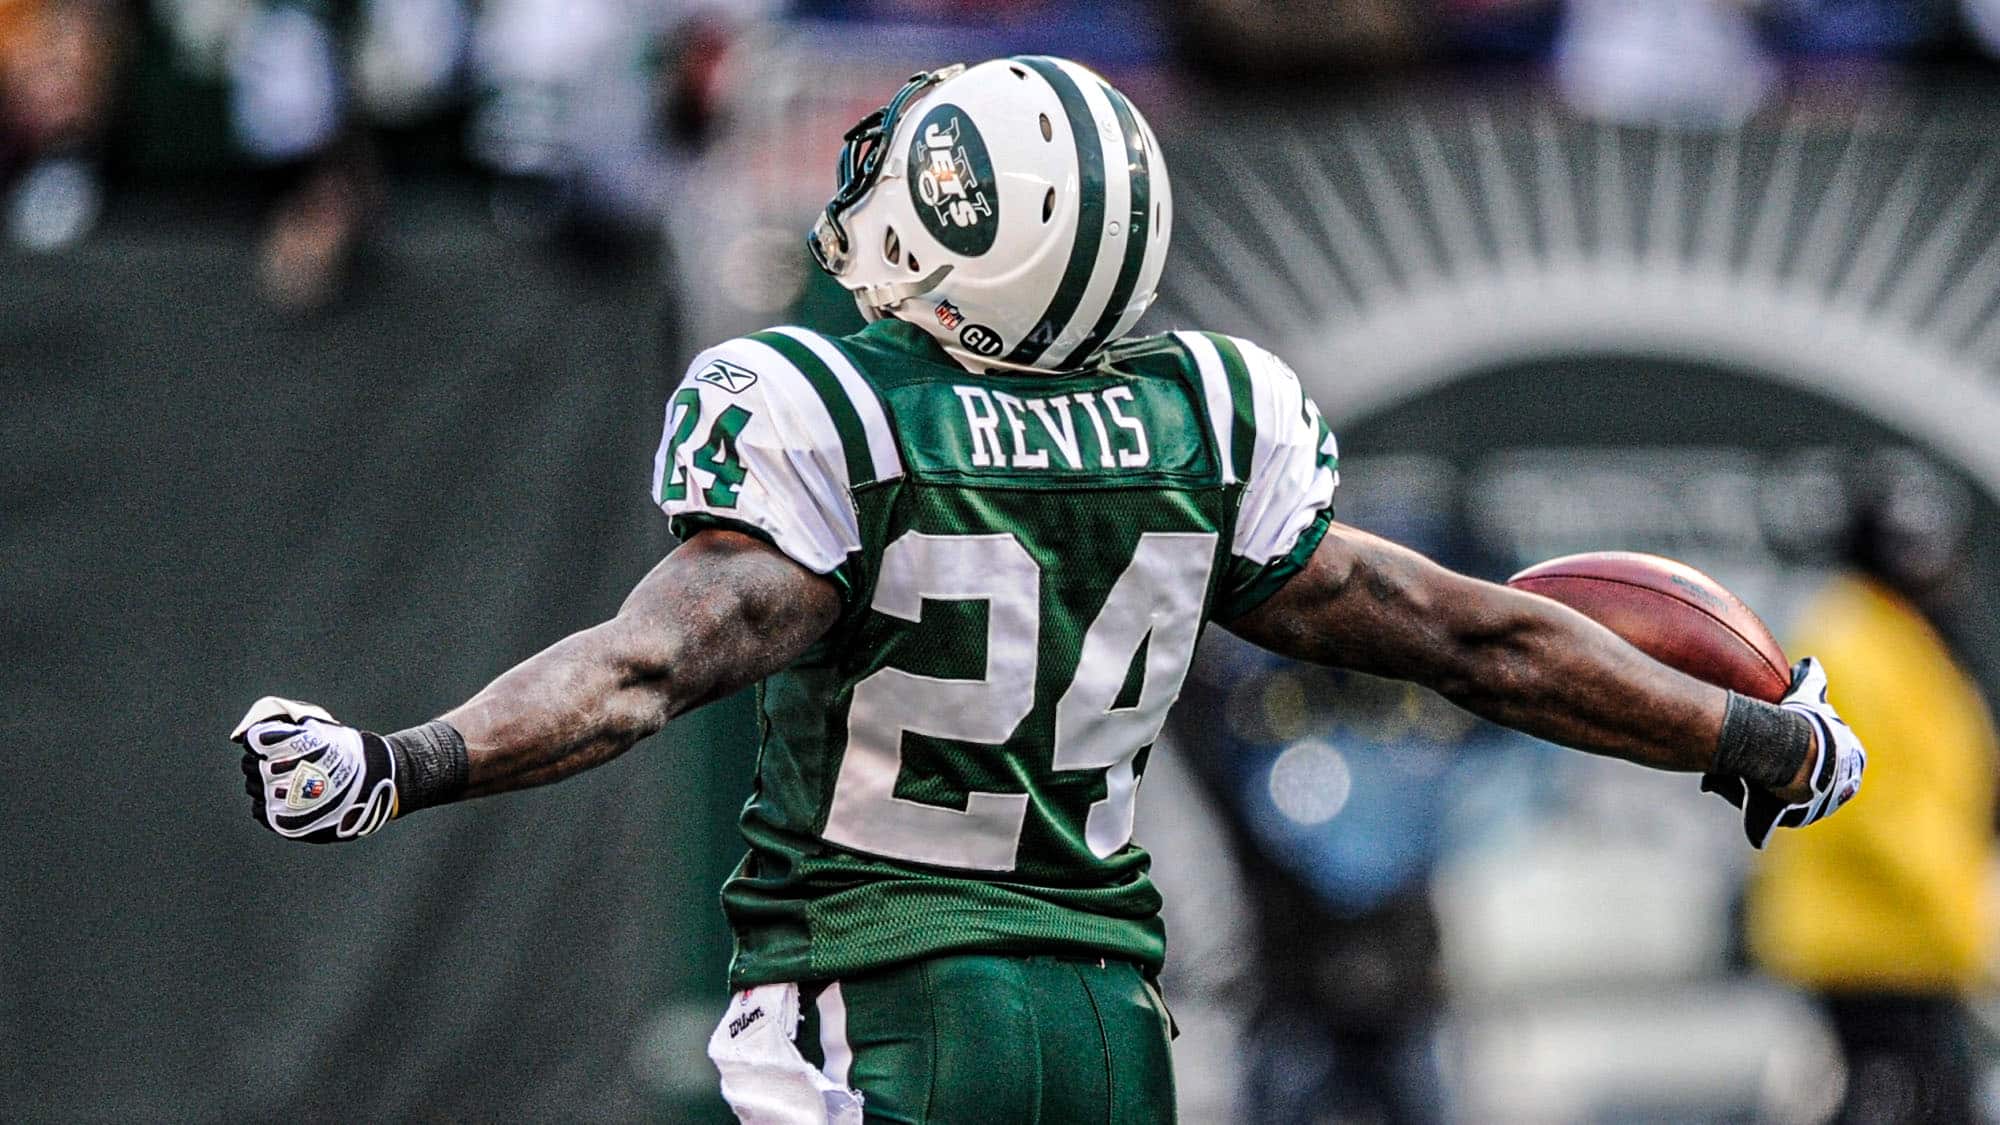 Should the Jets retire Darrelle Revis' number 24?